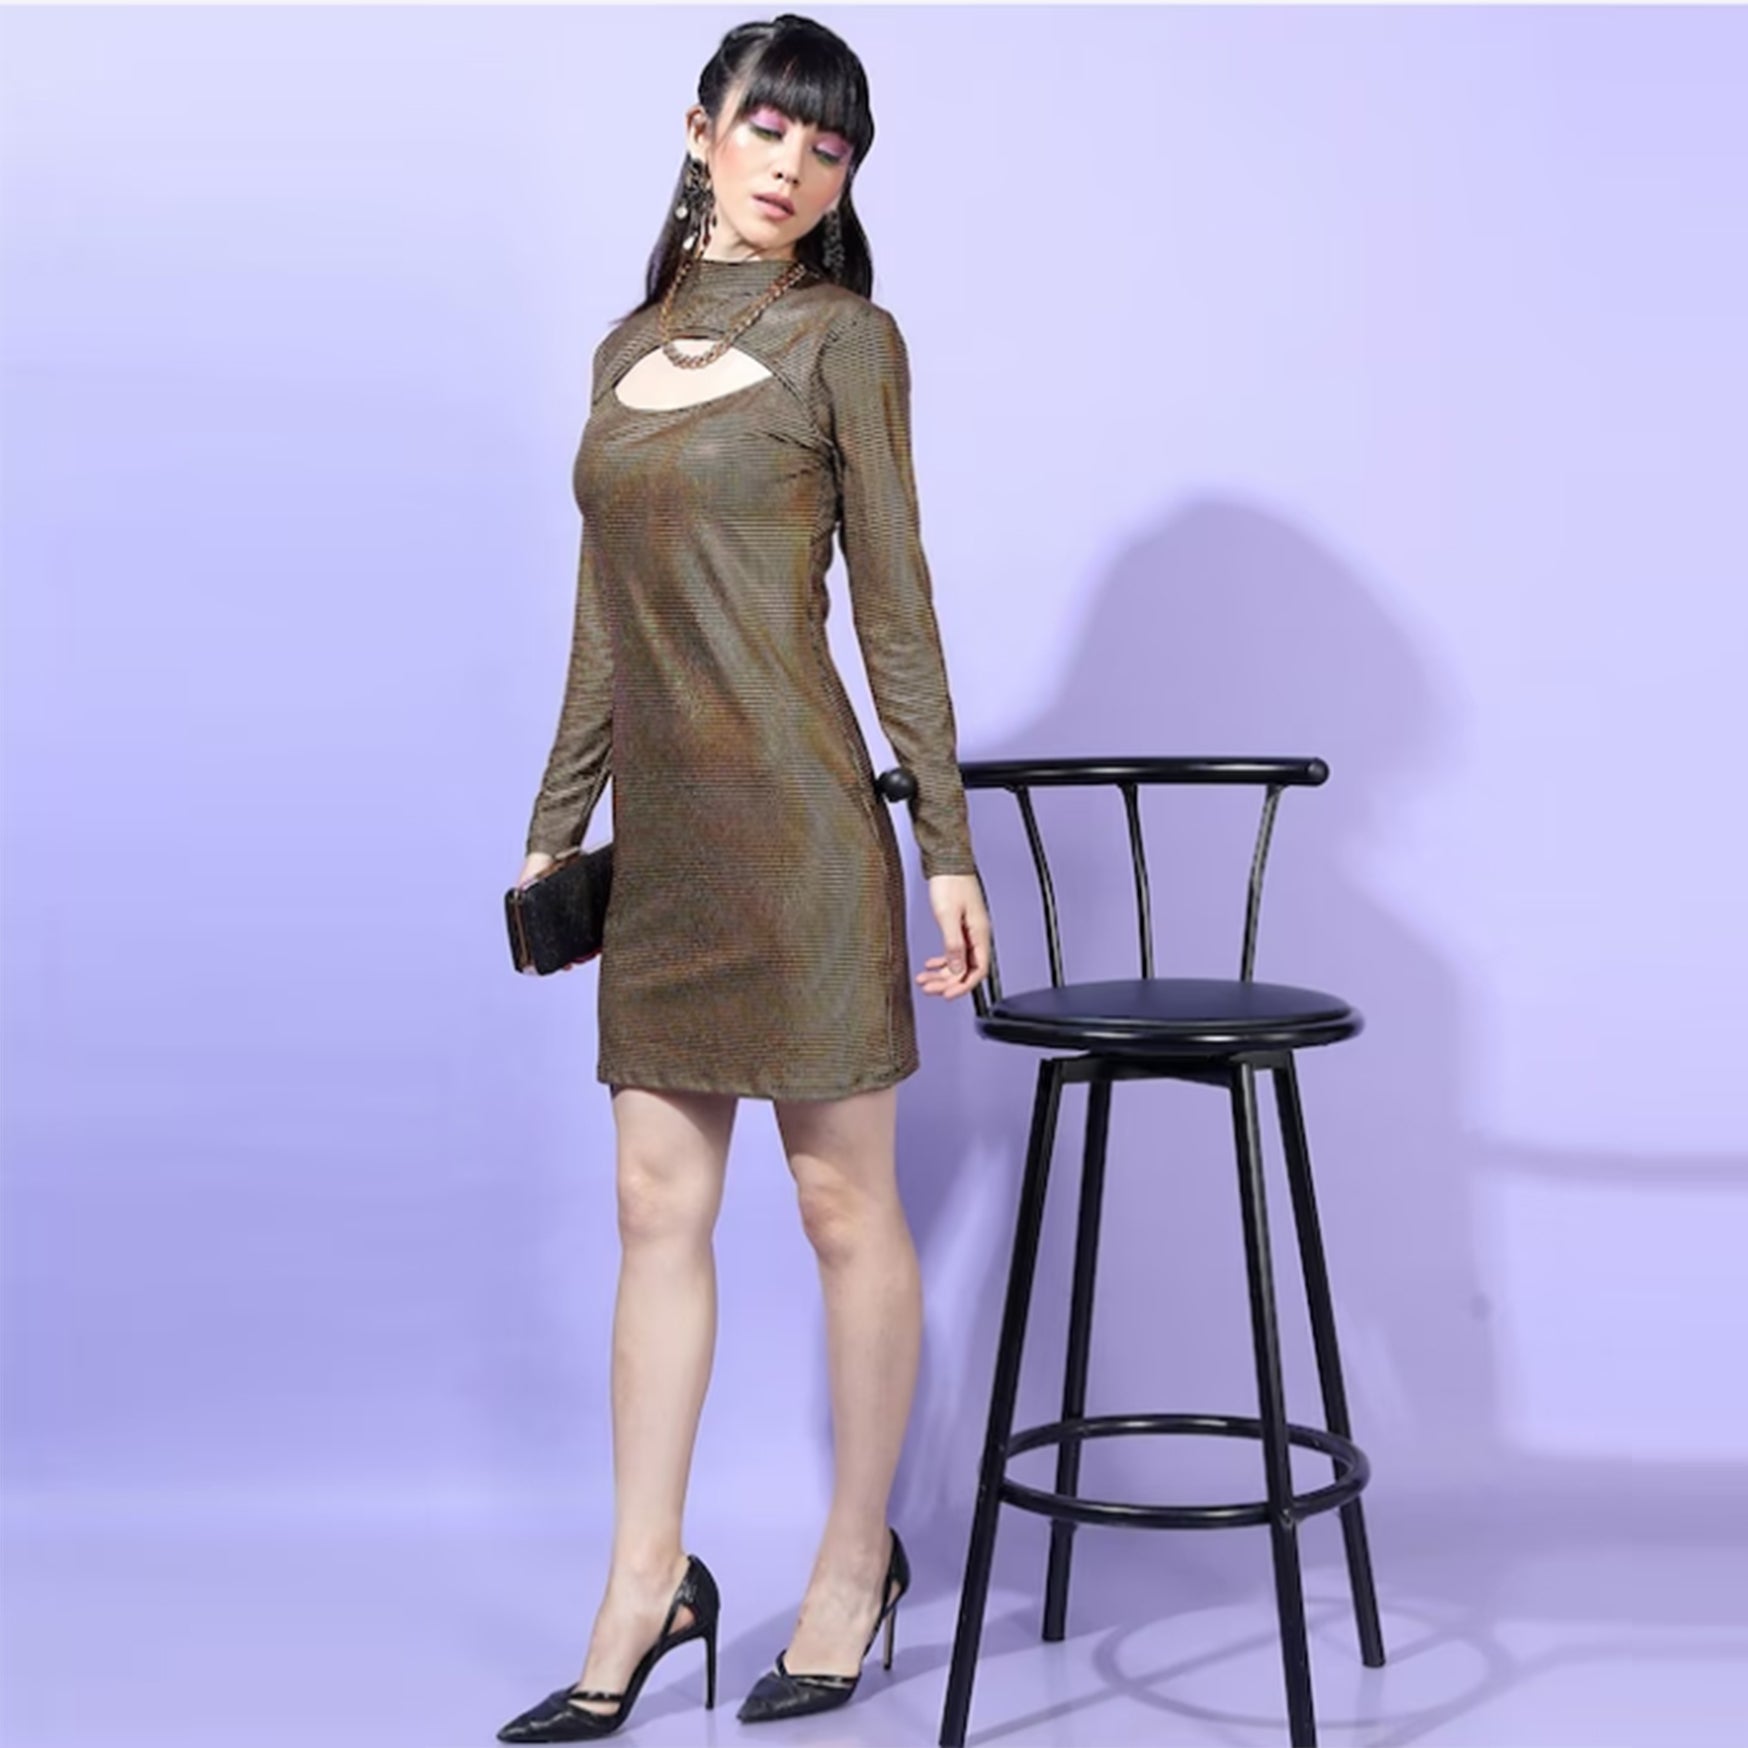 Black & Gold-Toned Sheath Dress